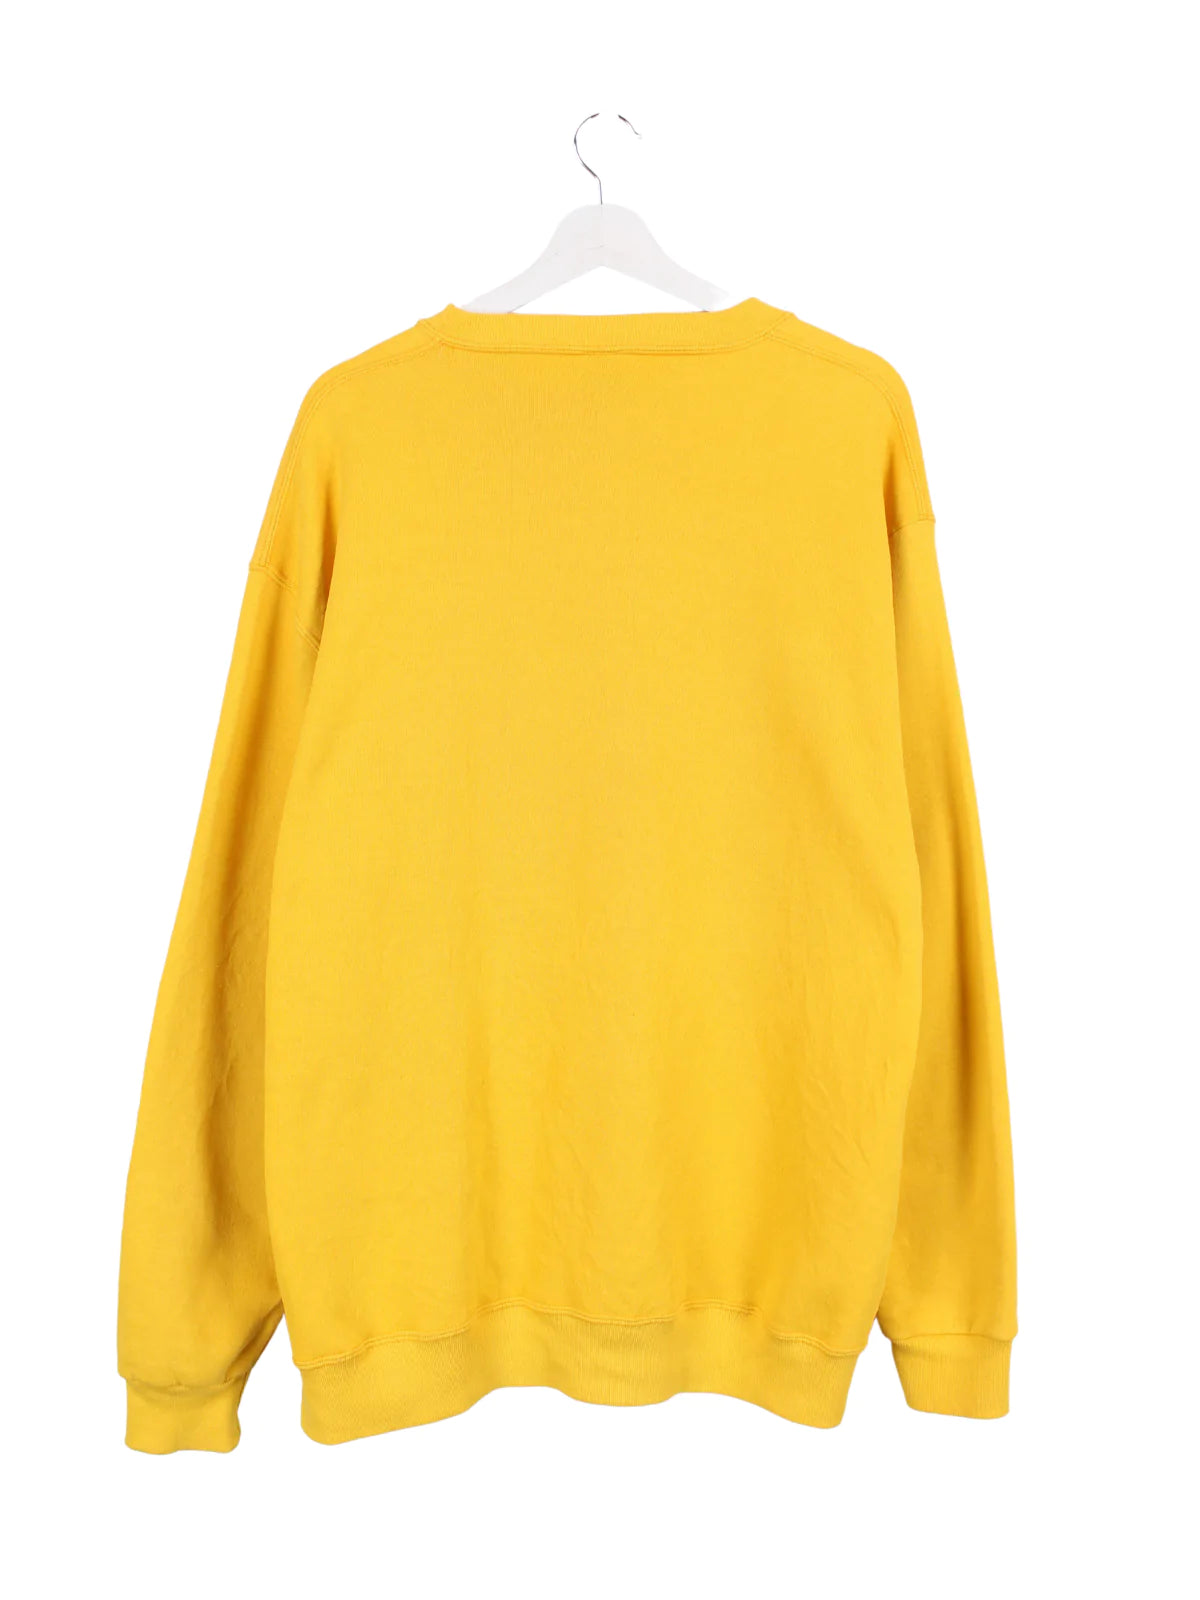 Russel Athletic Basic Sweater Gelb L